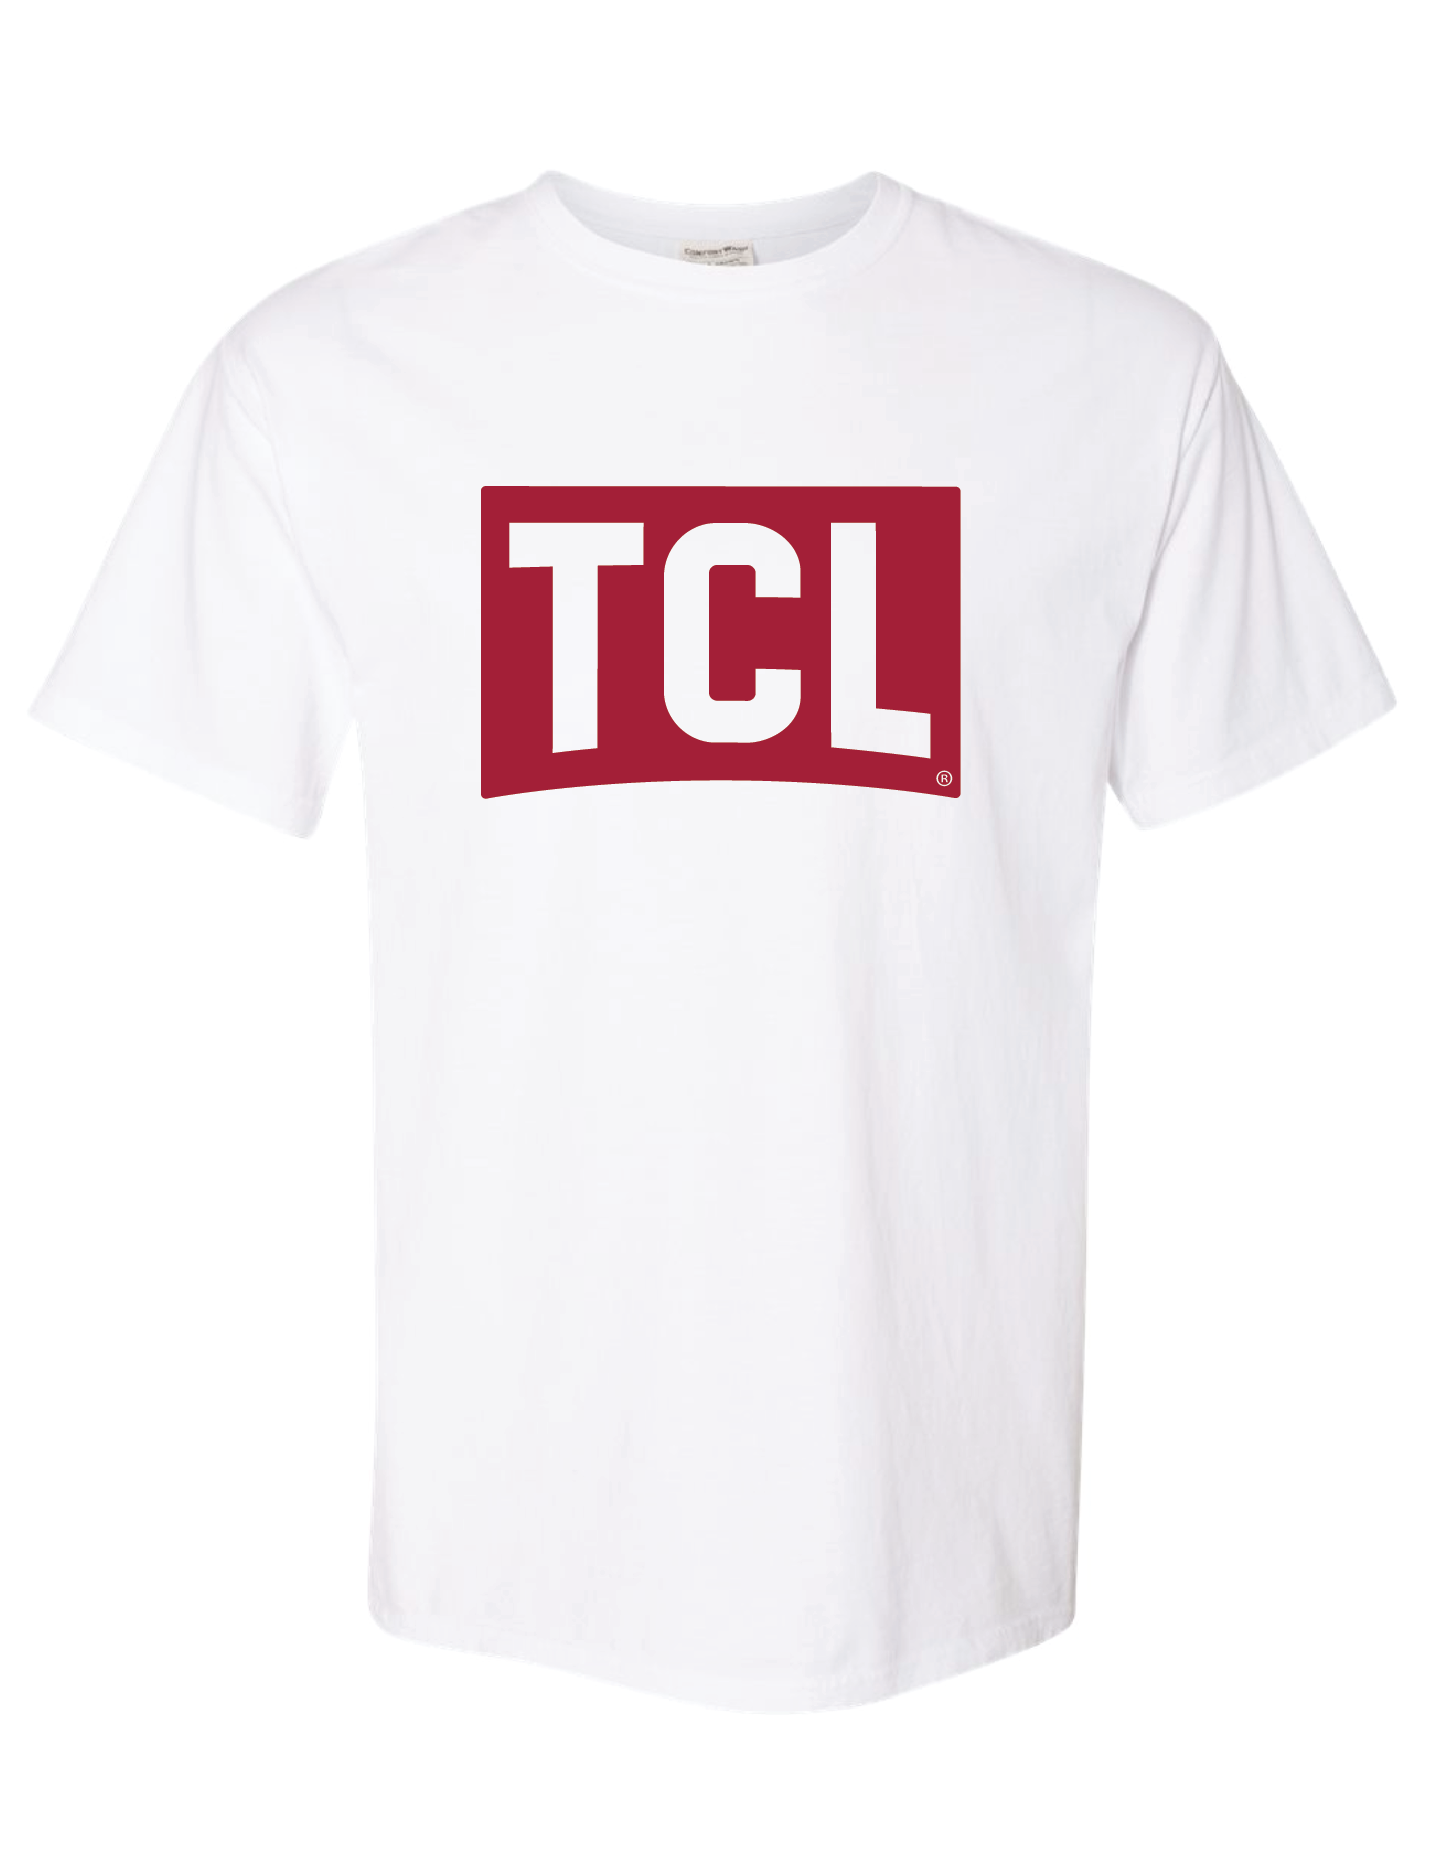 Visit Tuscaloosa: Short Sleeve CRIMSON TCL Tee